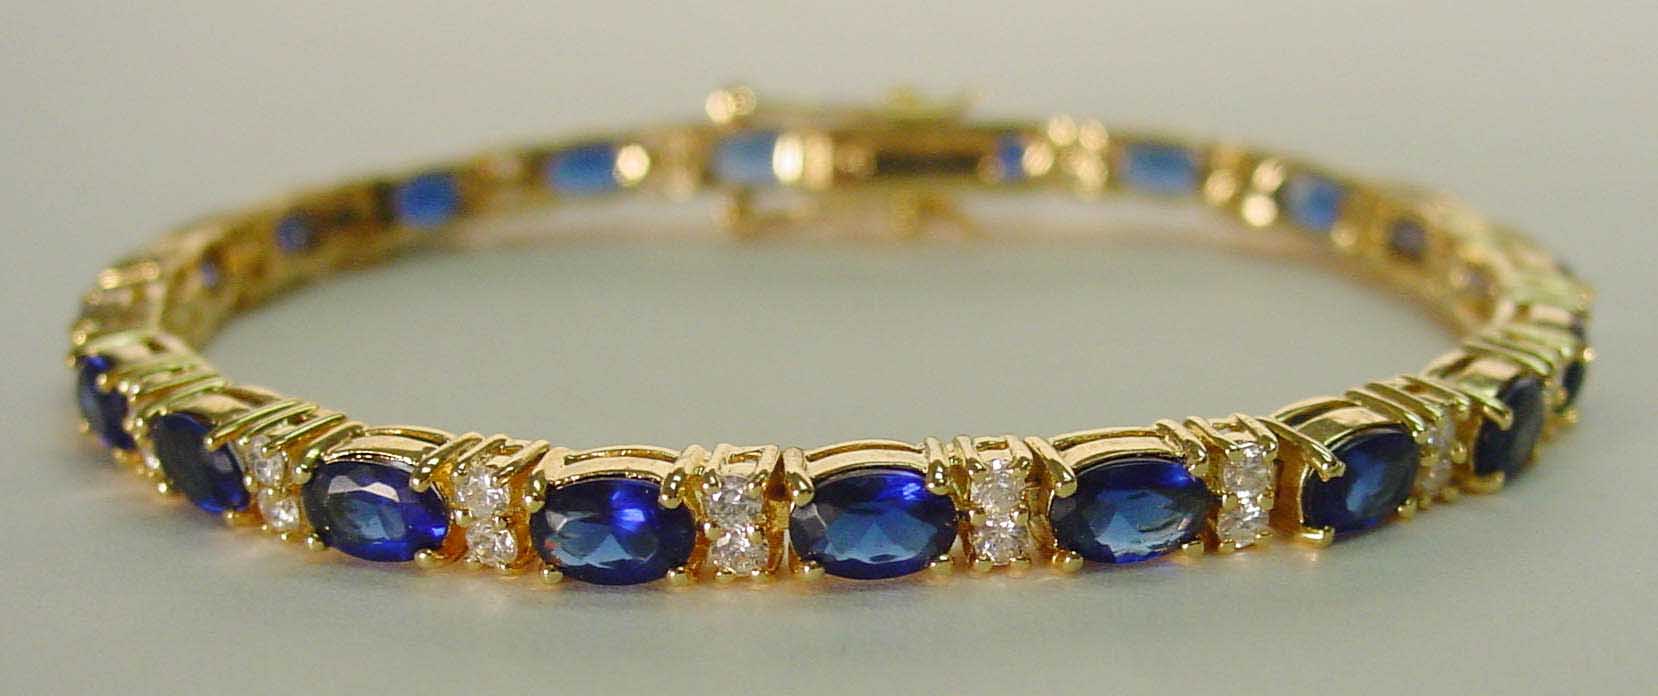 Sapphire CZ & clear CZ gold bracelet